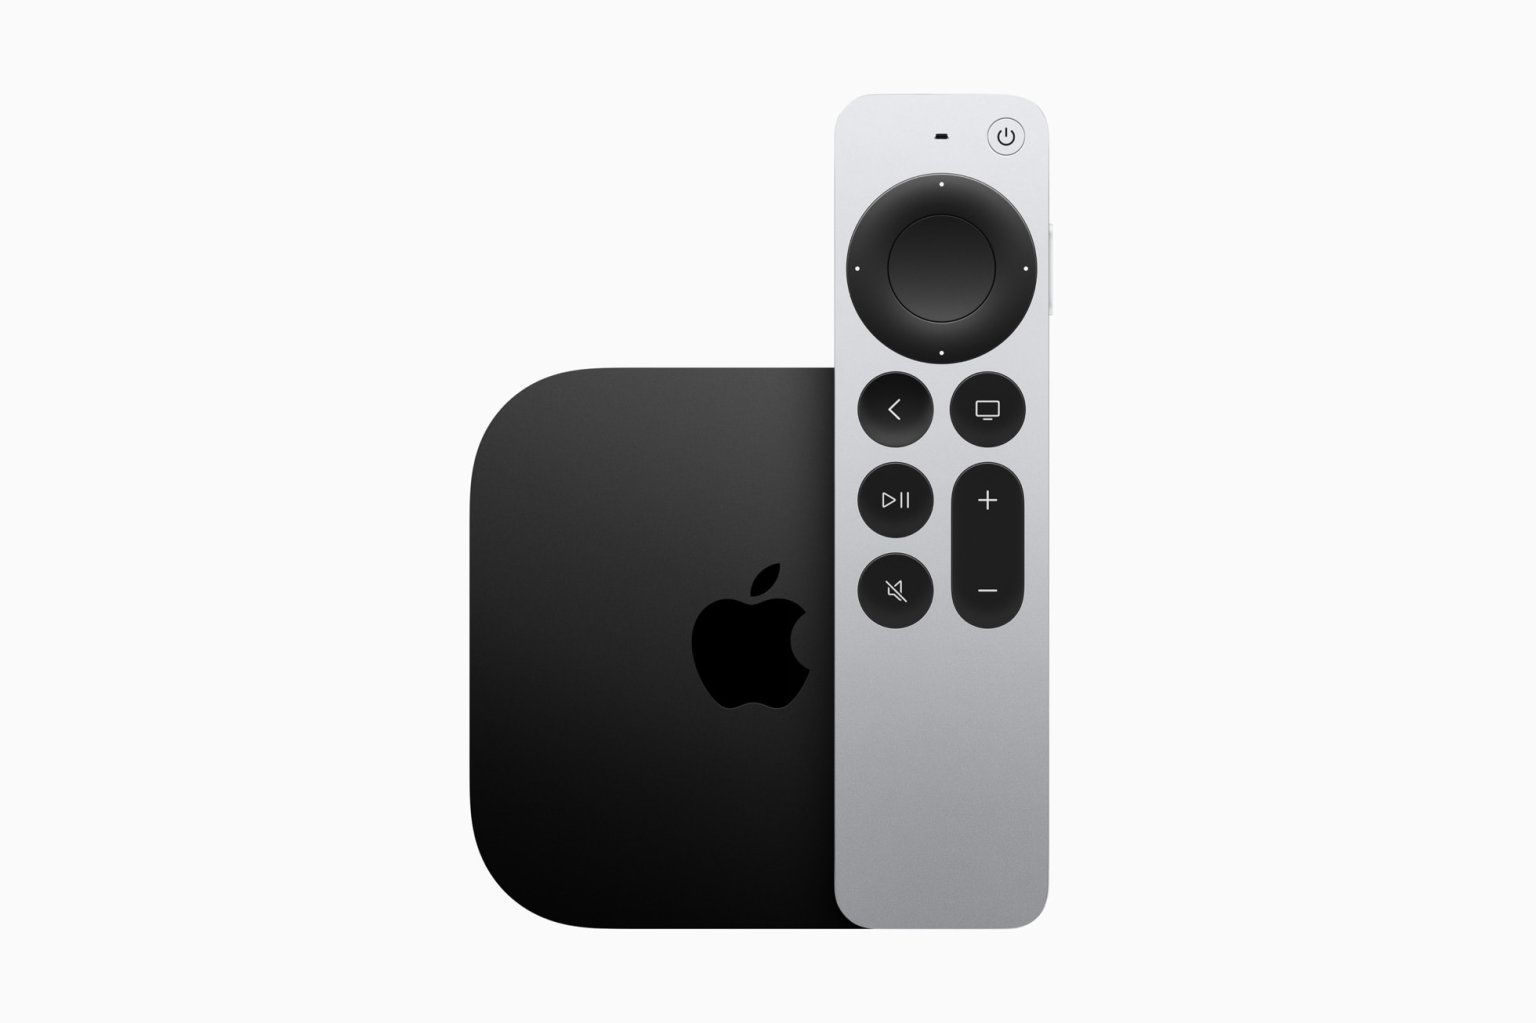 Apple TV 4K Siri Remote 221018 big jpg large 2x